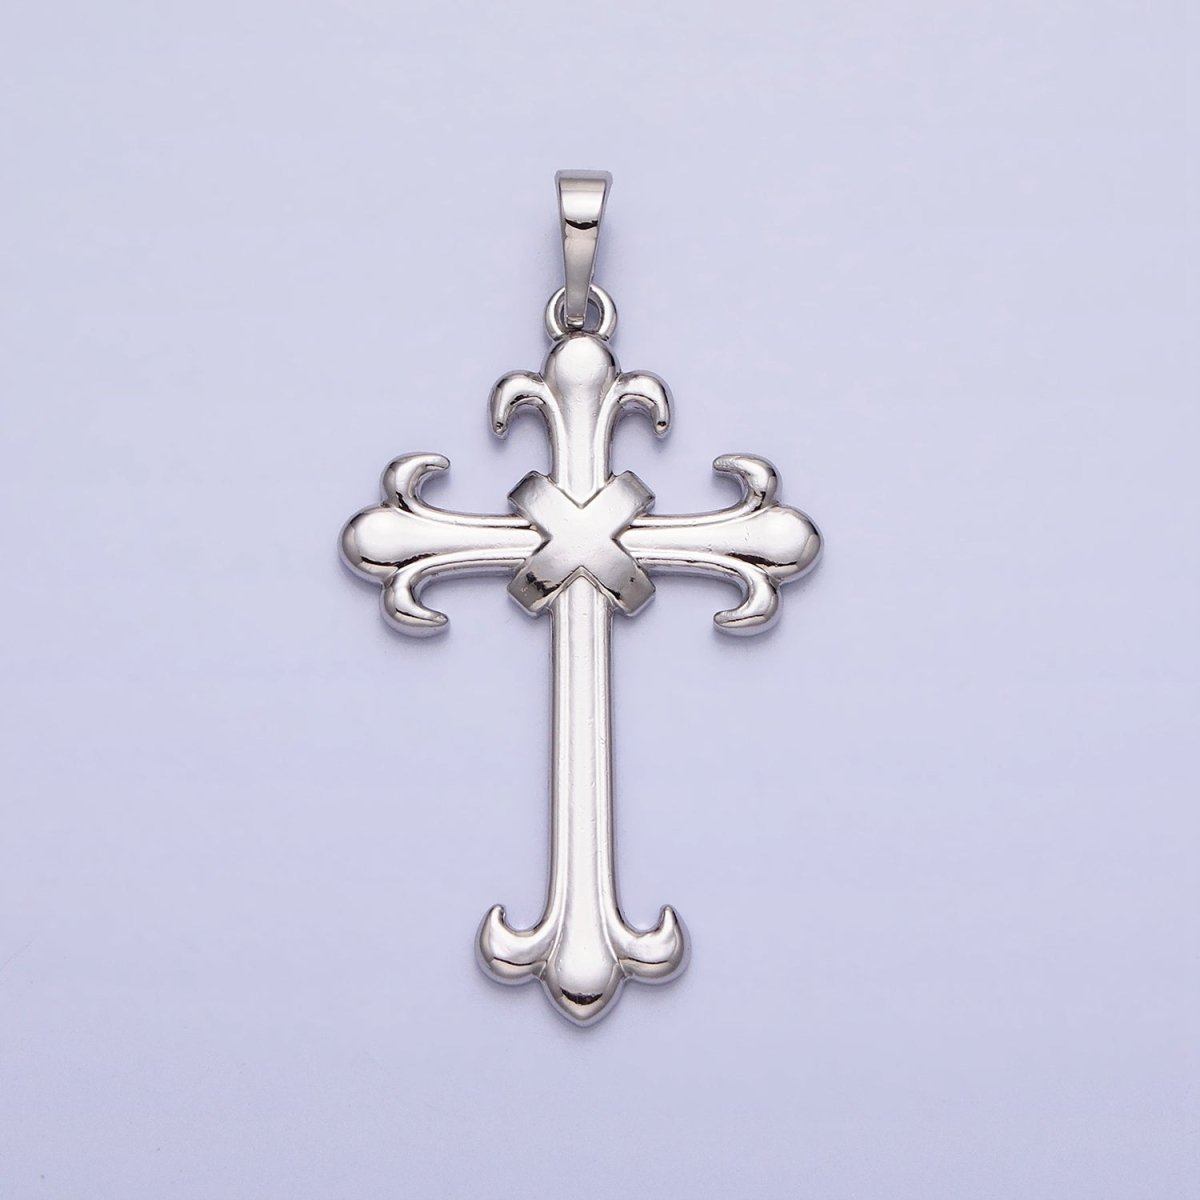 Antique Cross Pendant Victorian Inspired Cross Charm Religious Jewelry Making AA249 - DLUXCA